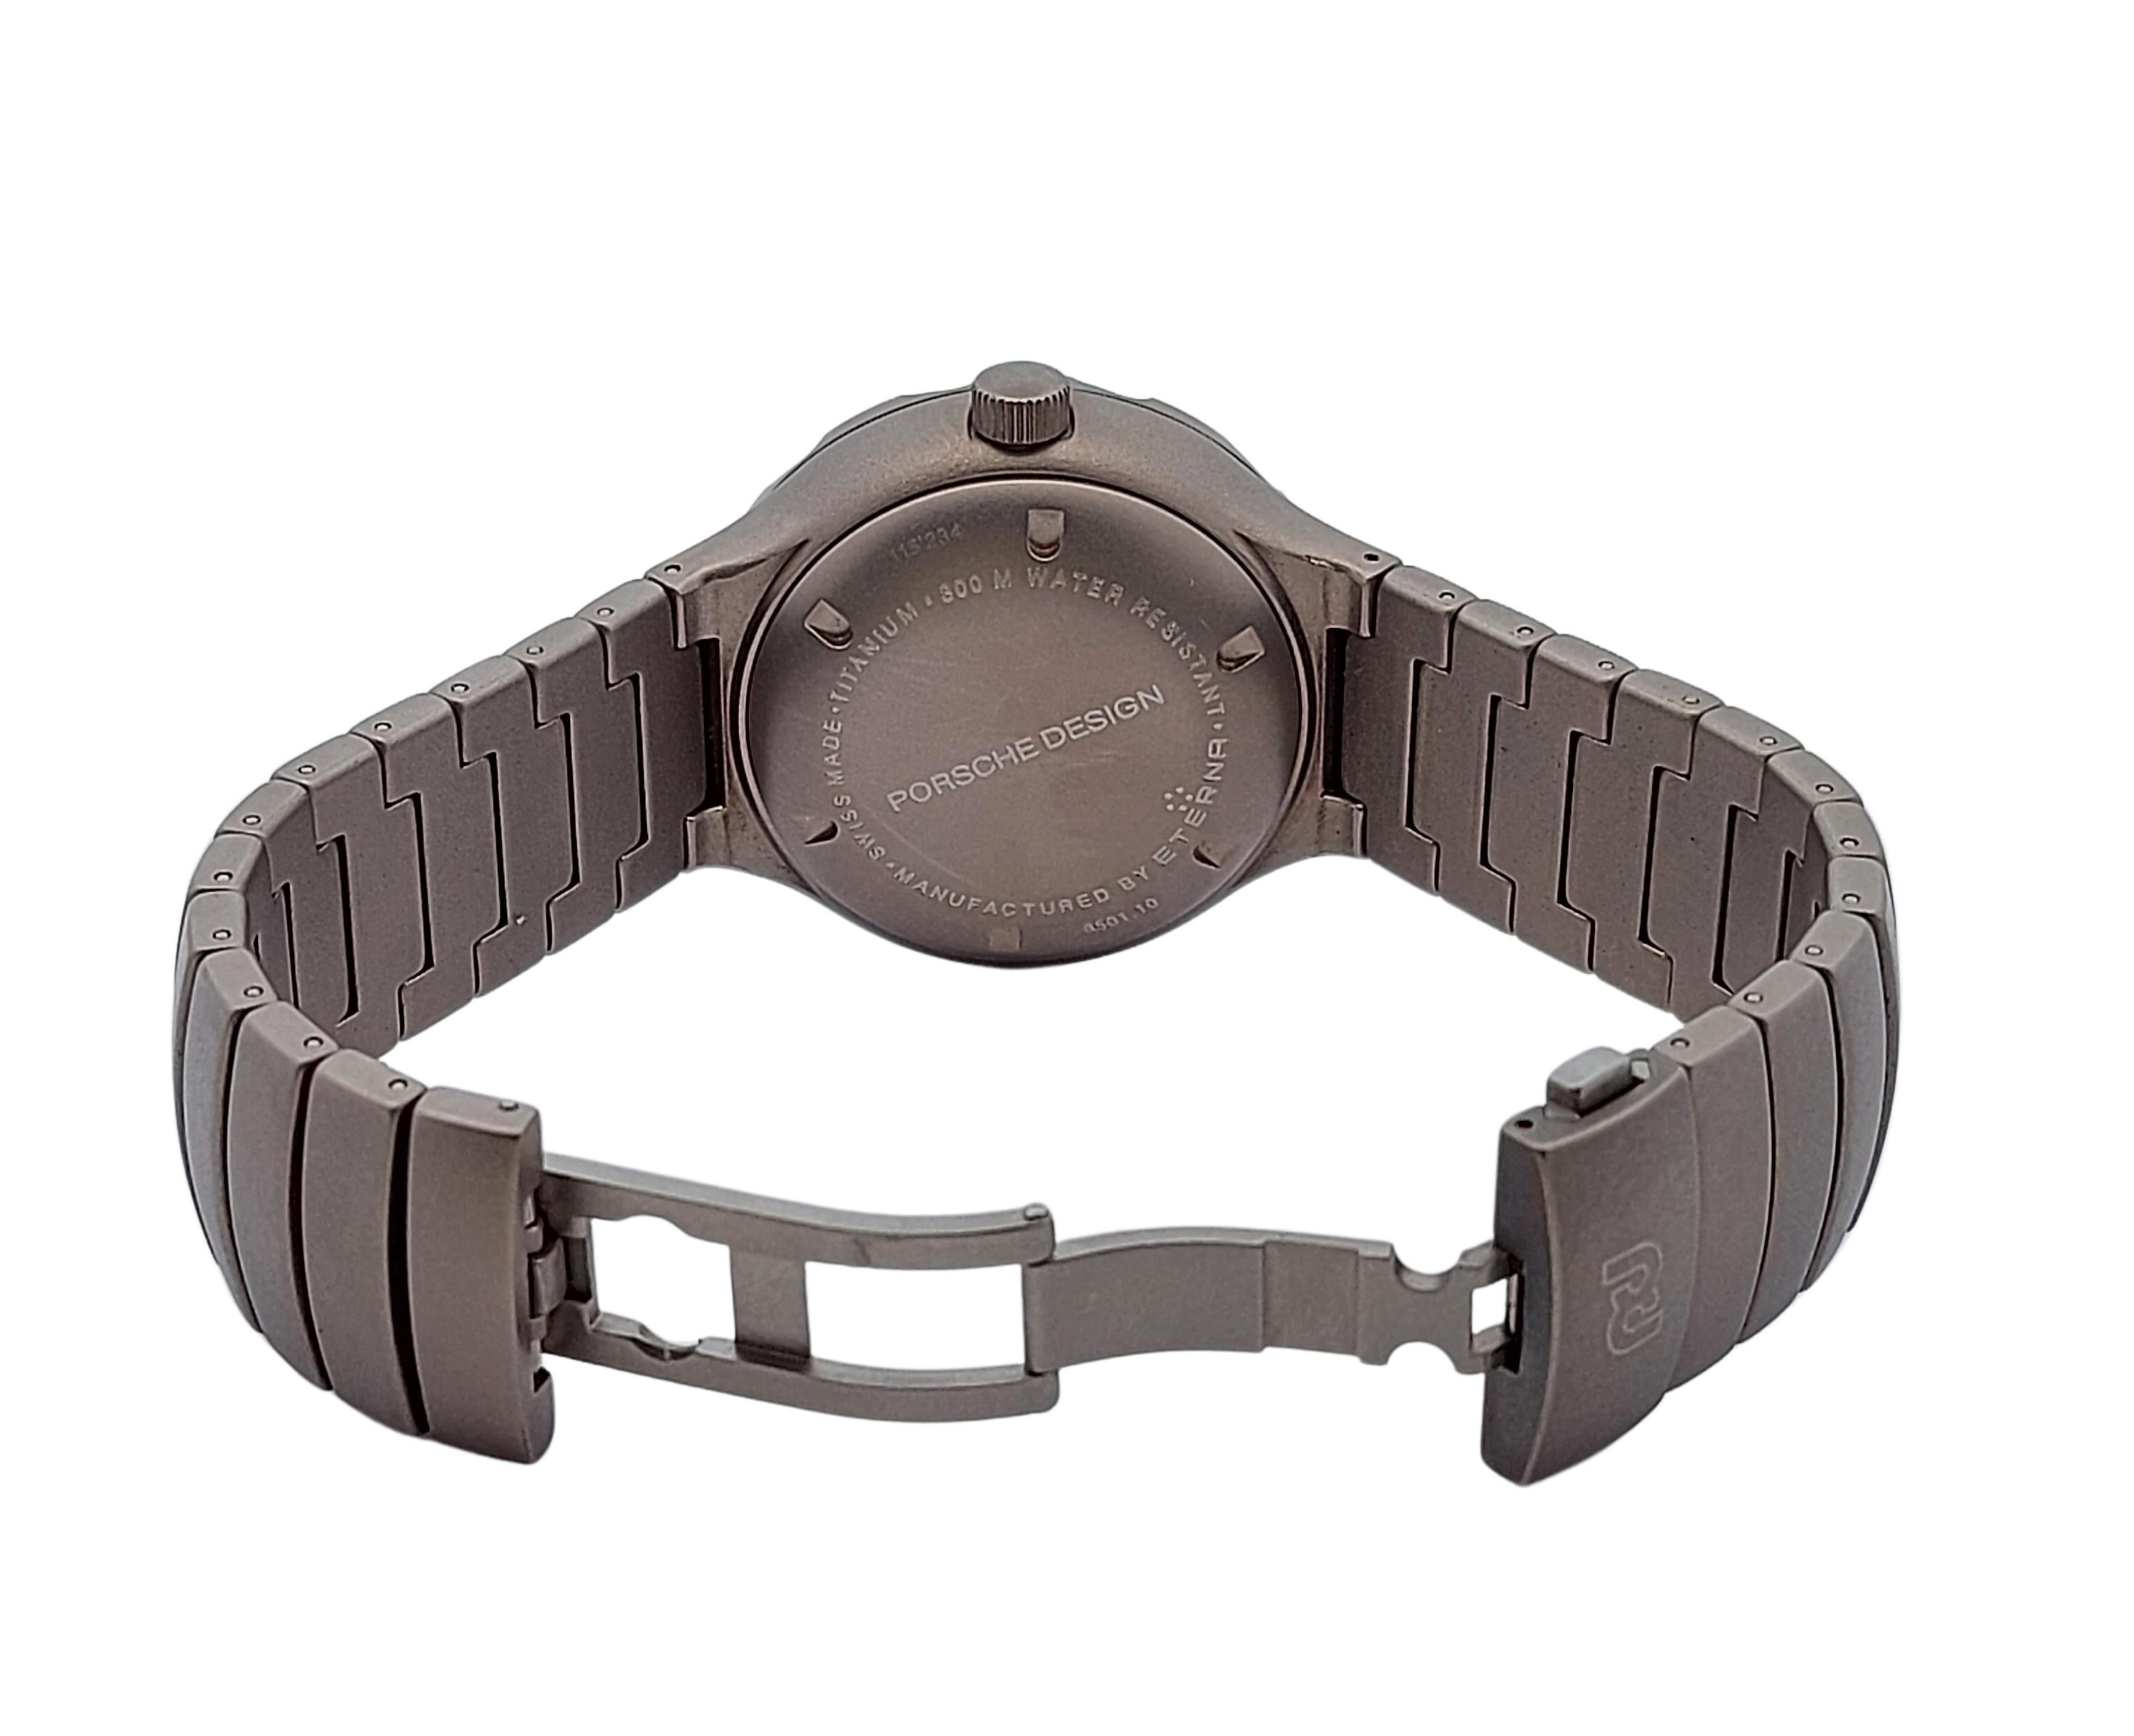 Titanium Rare and Collectible Porsche Design Watch, Automatic For Sale 1